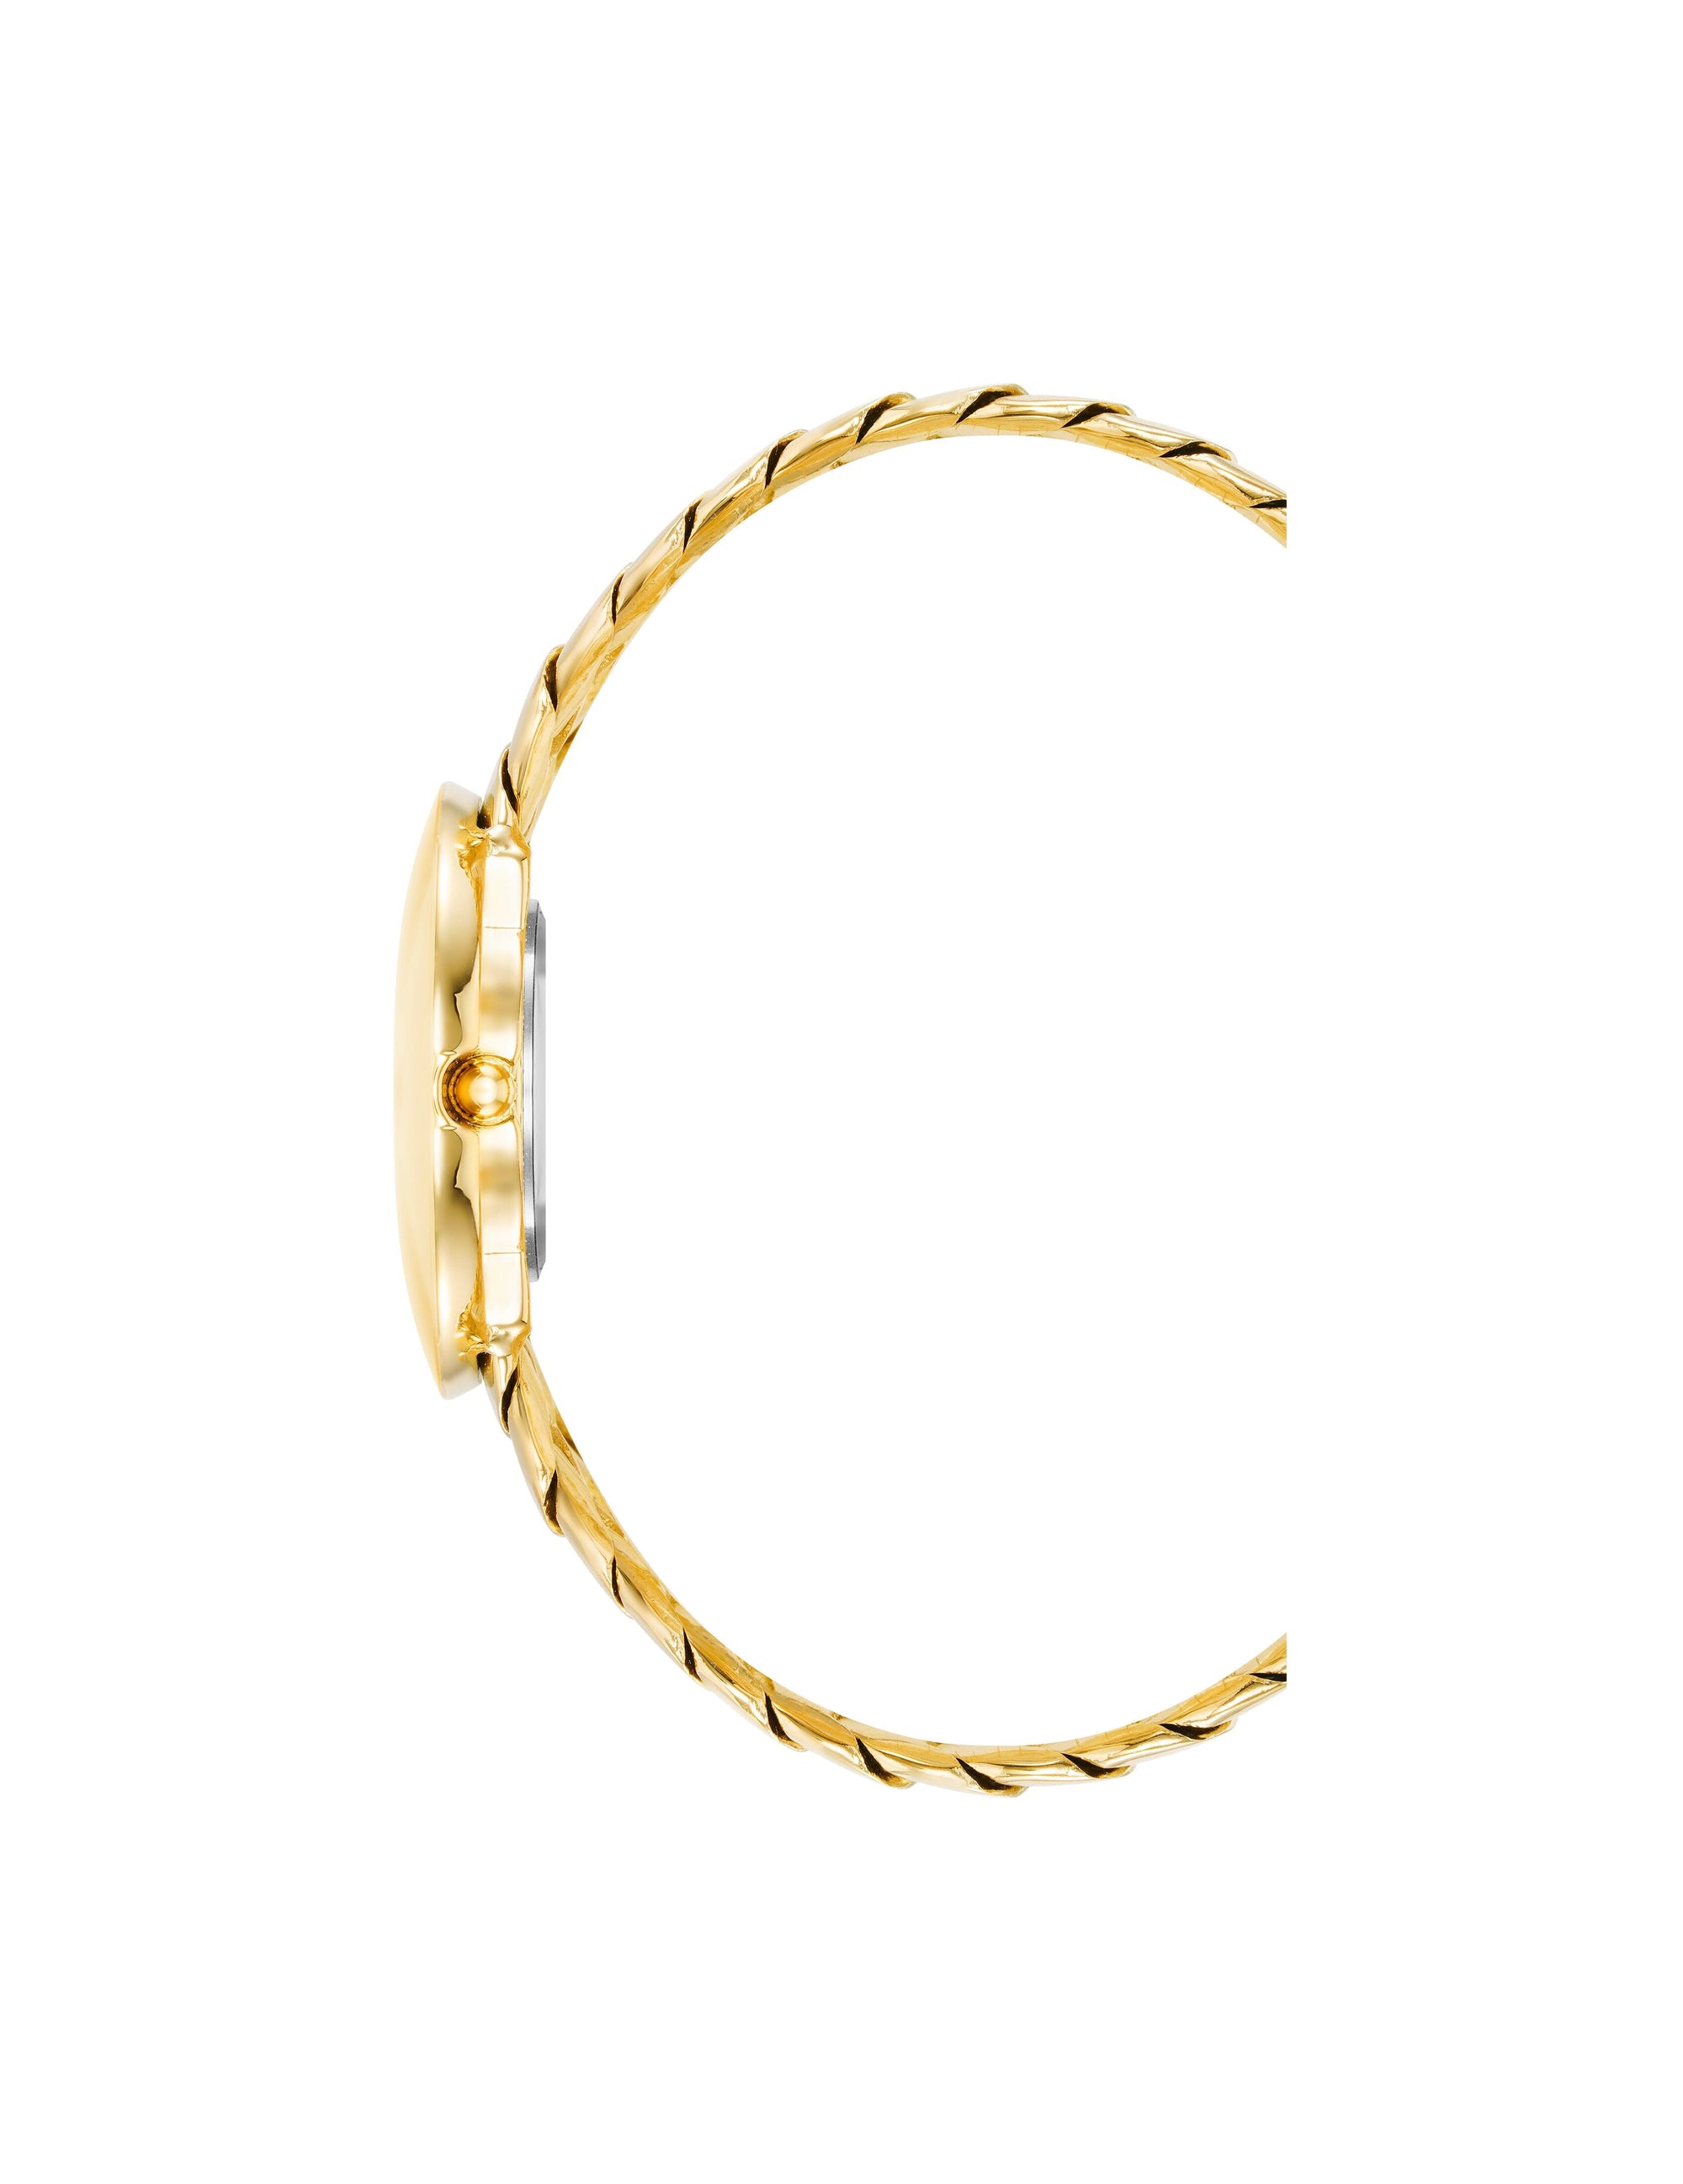 Anne Klein Silver-Tone/ Gold-Tone Double Chain Bracelet Watch